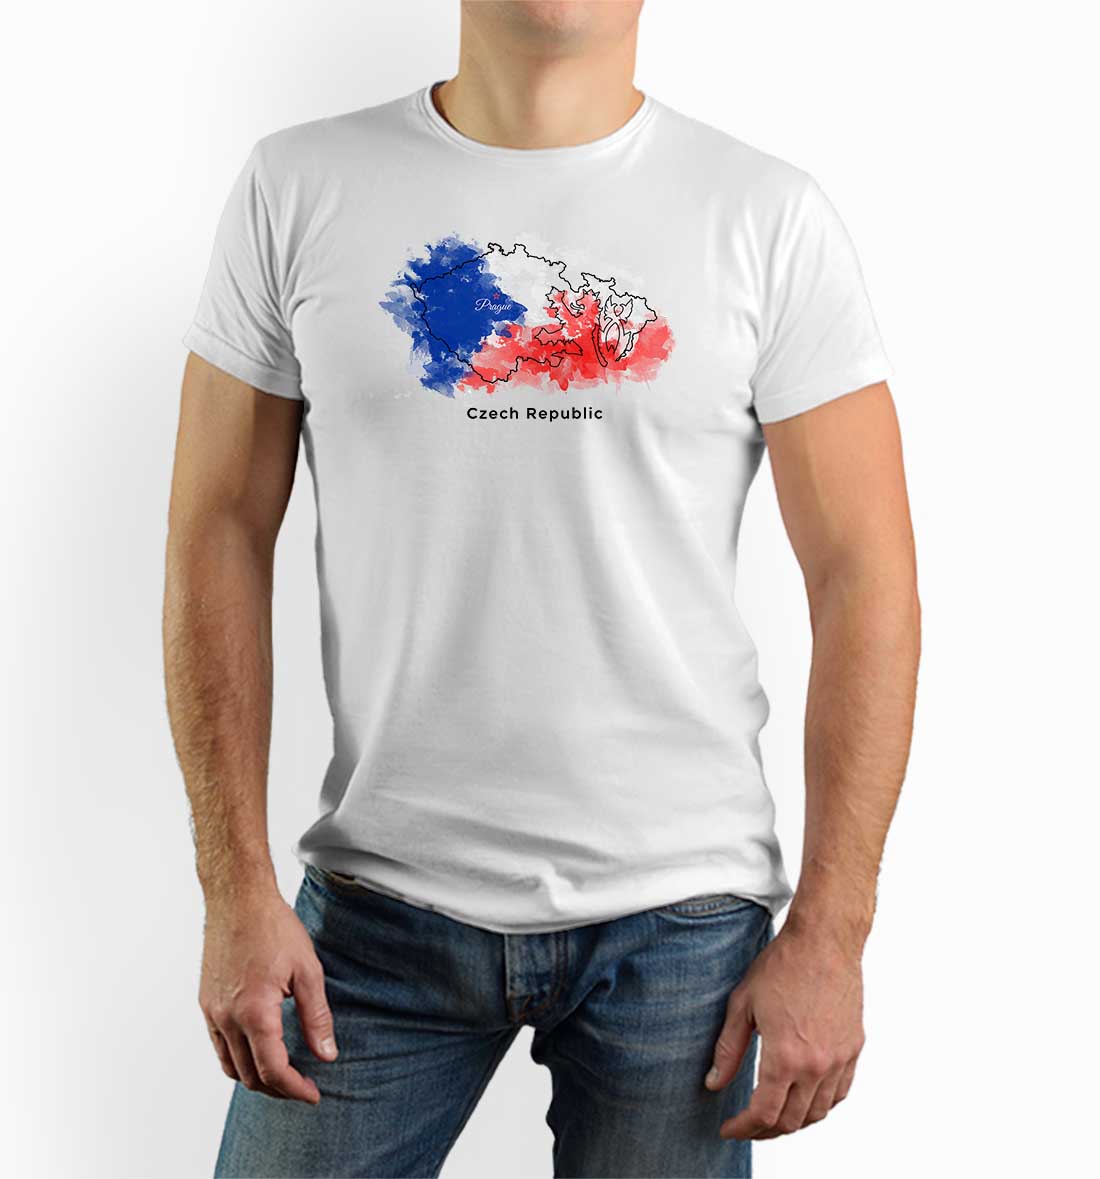 Tshirt Czech Republic